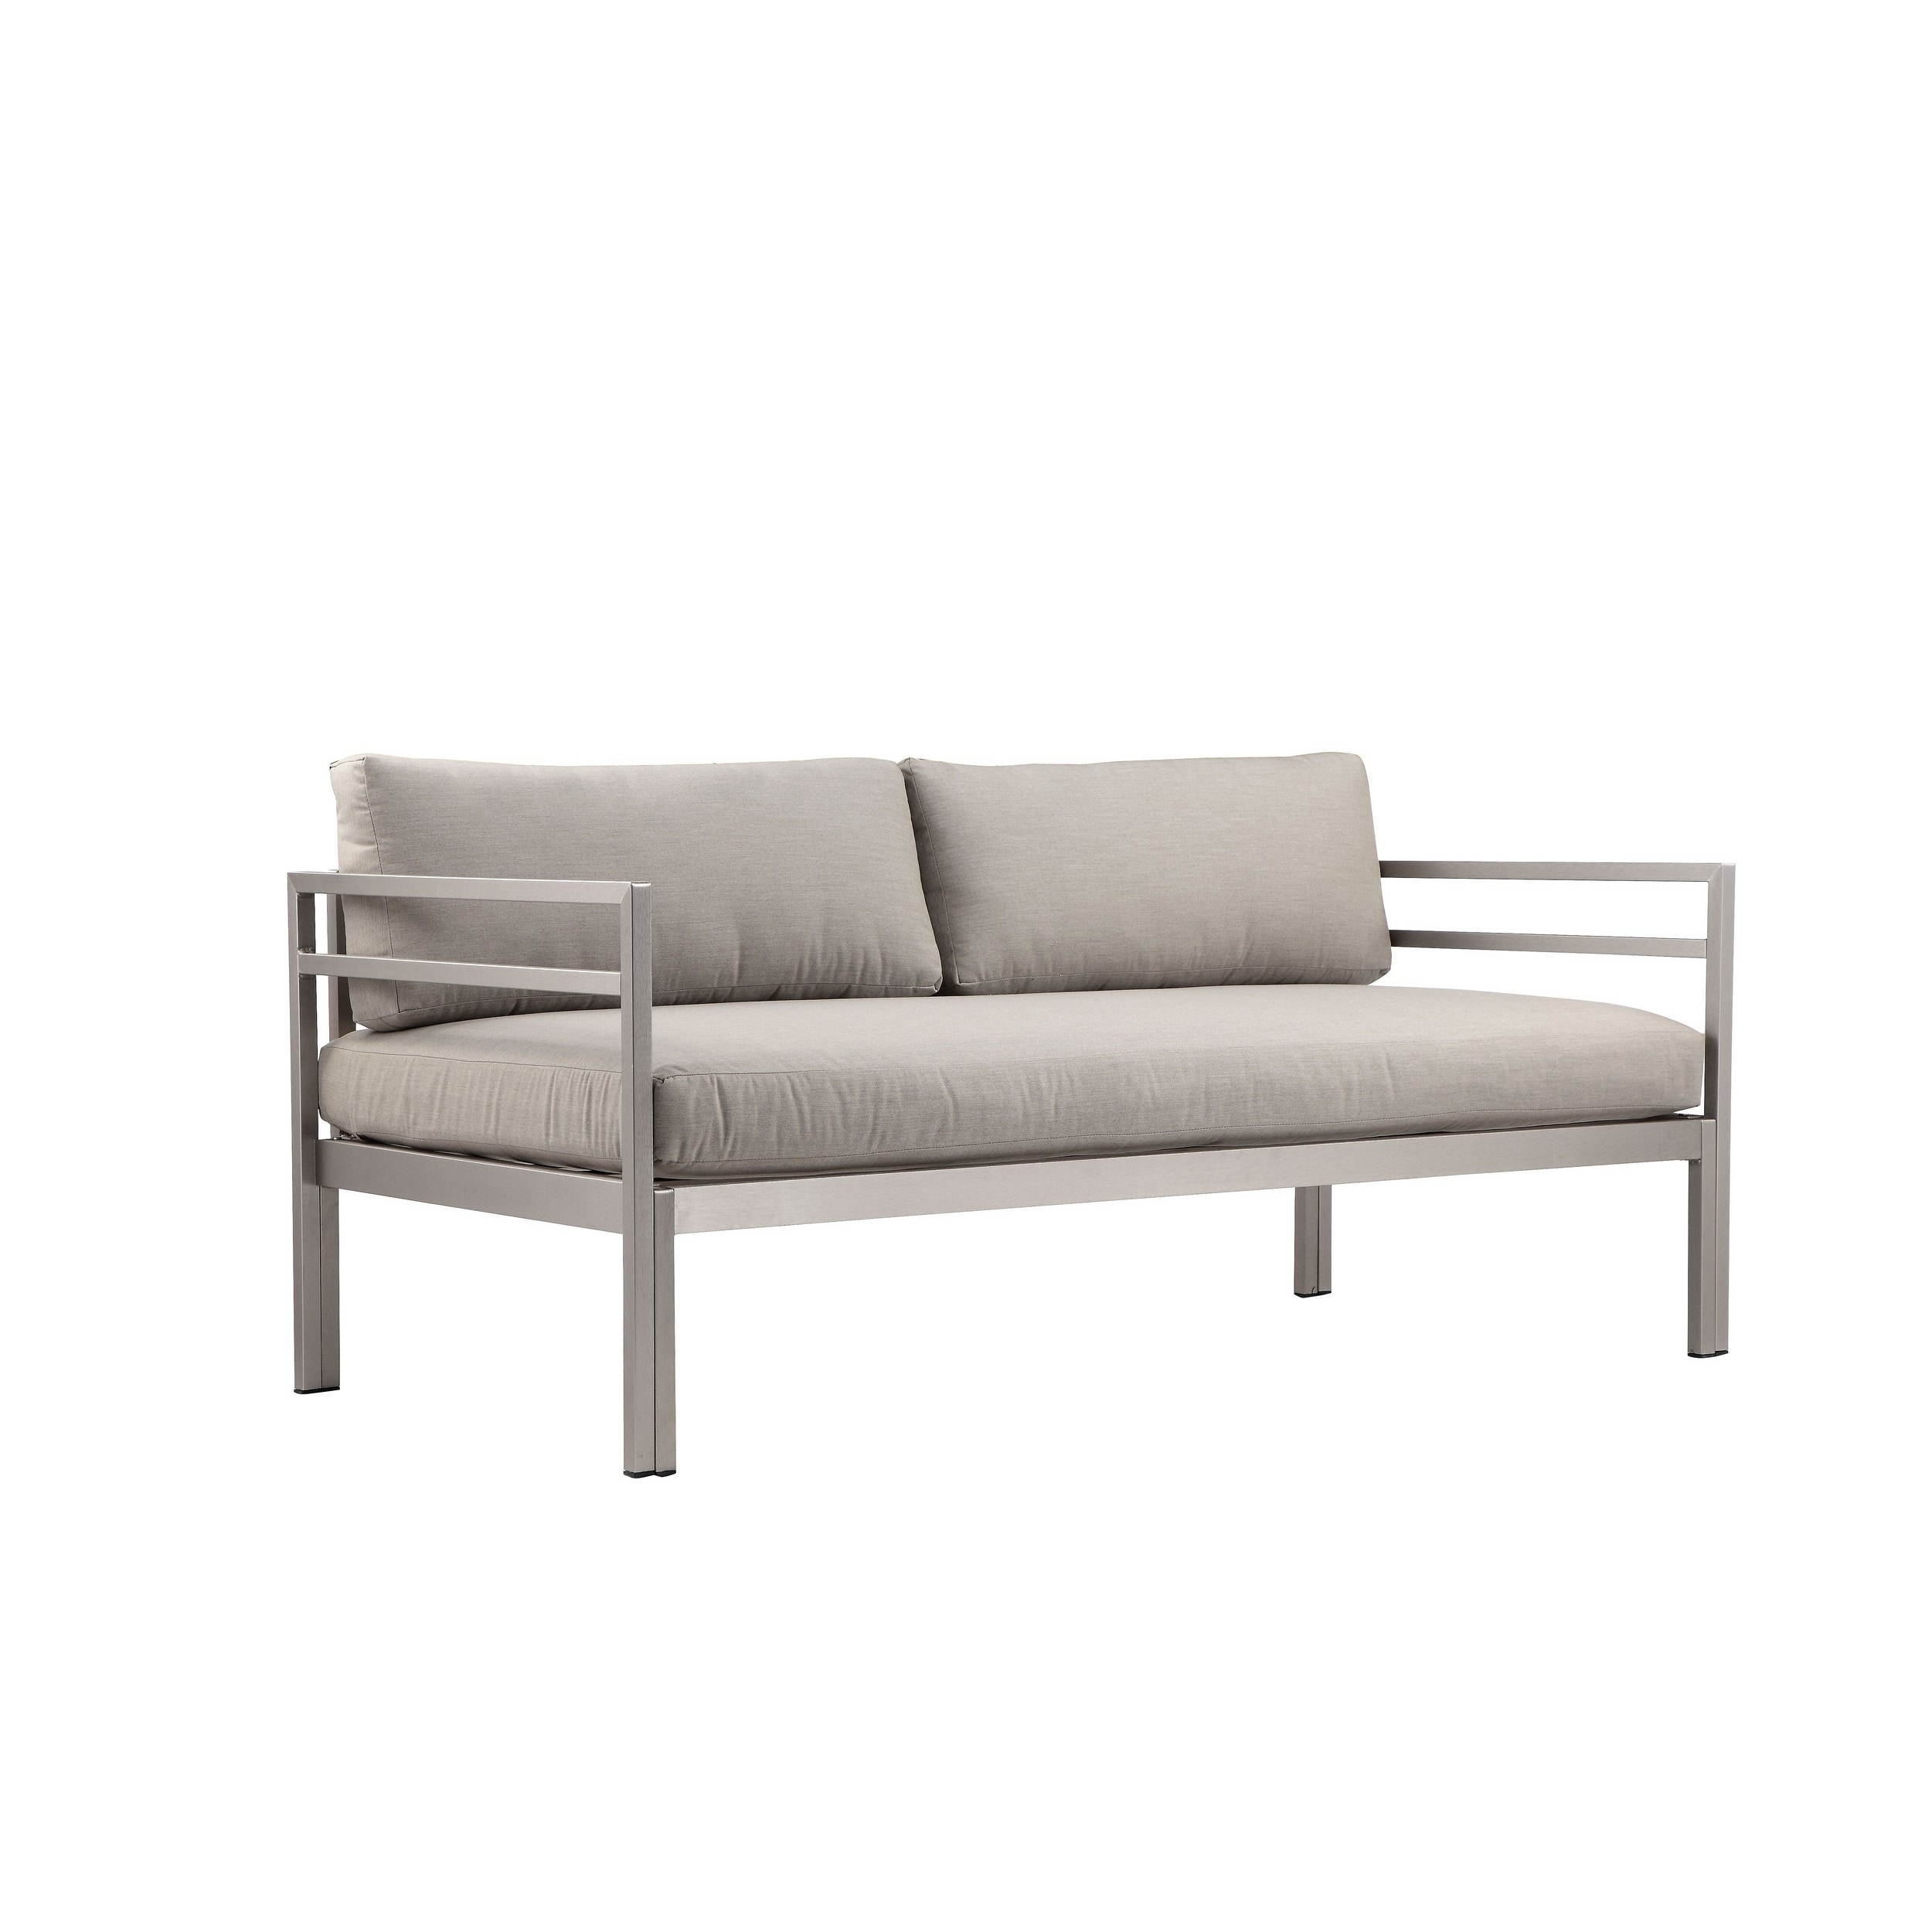 Billy 65 Inch Modern Outdoor Sofa  Gray Aluminum Frame  Fabric Cushions